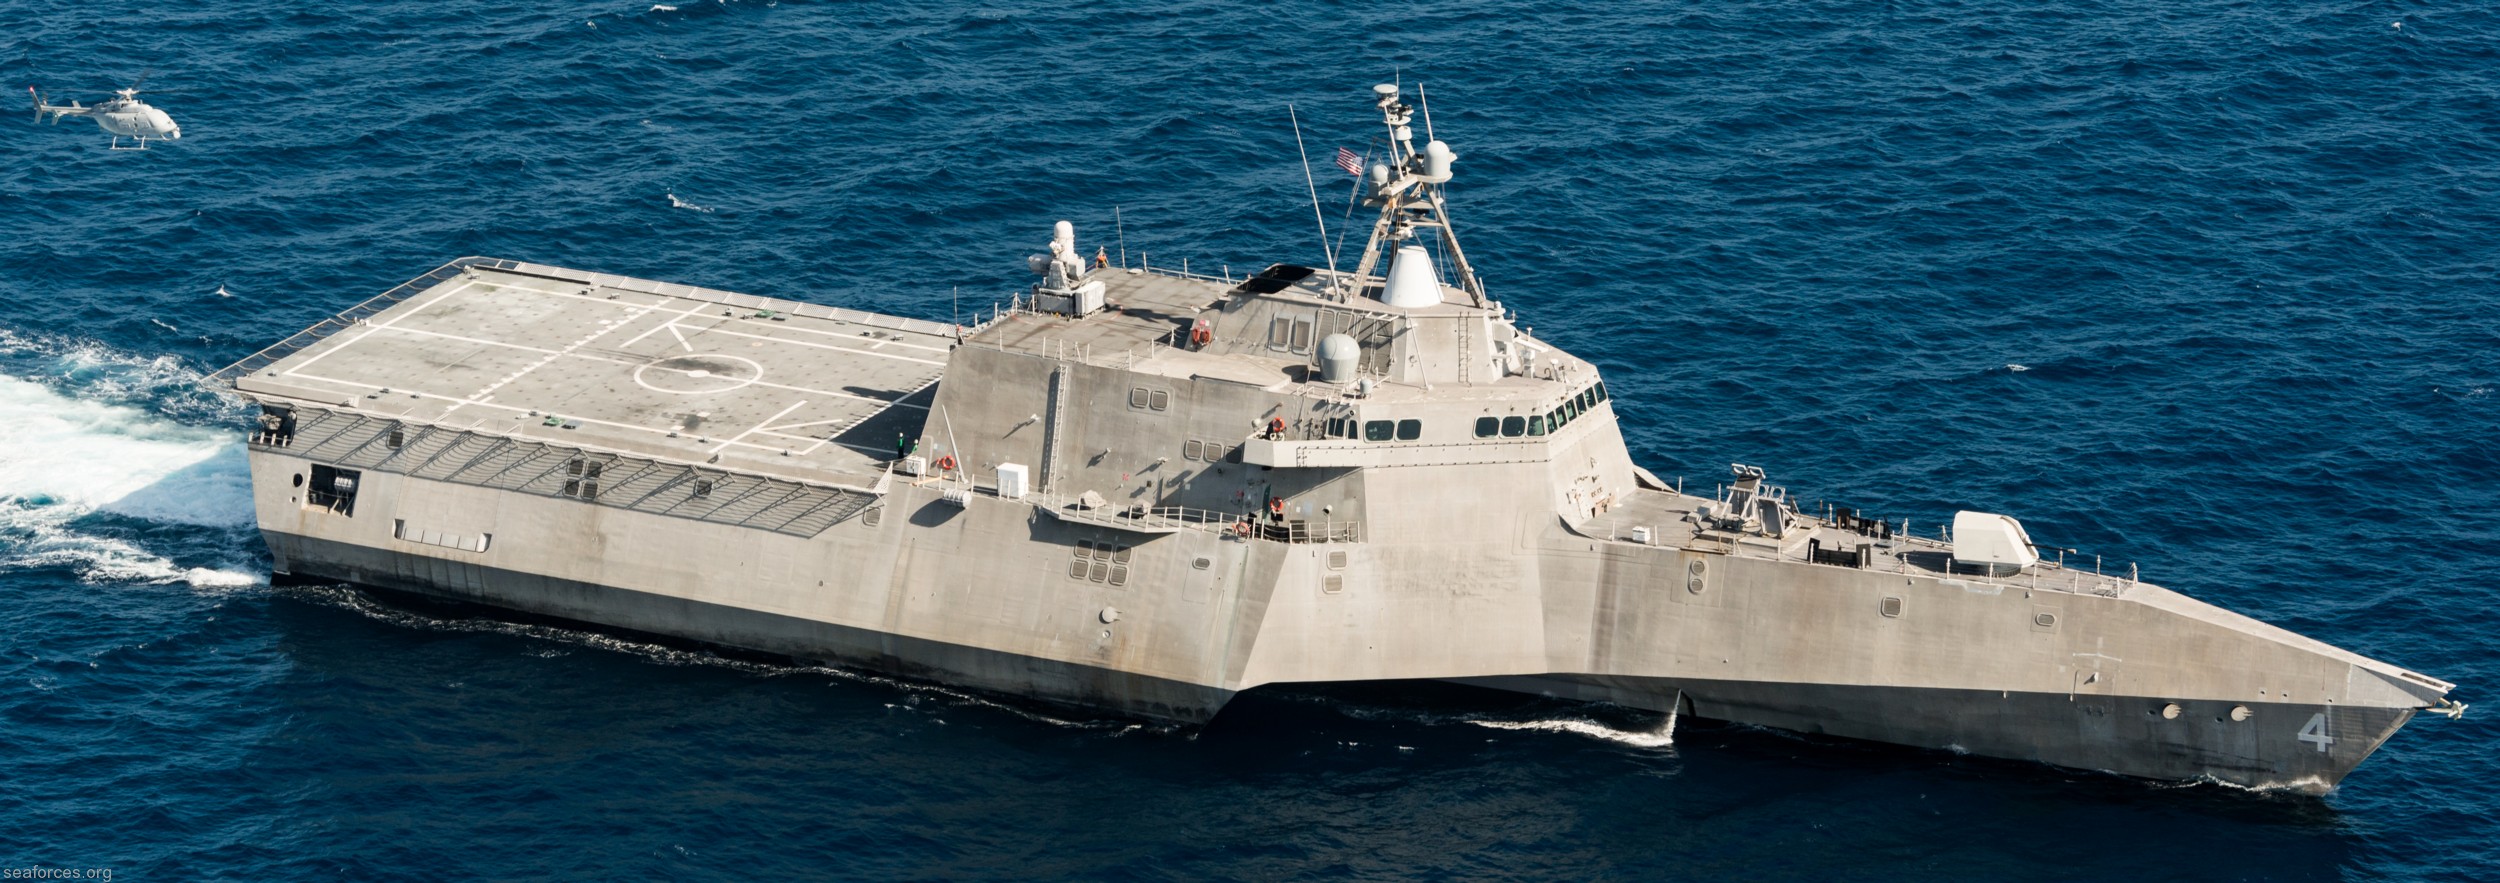 lcs-4 uss coronado independence class littoral combat ship us navy 20